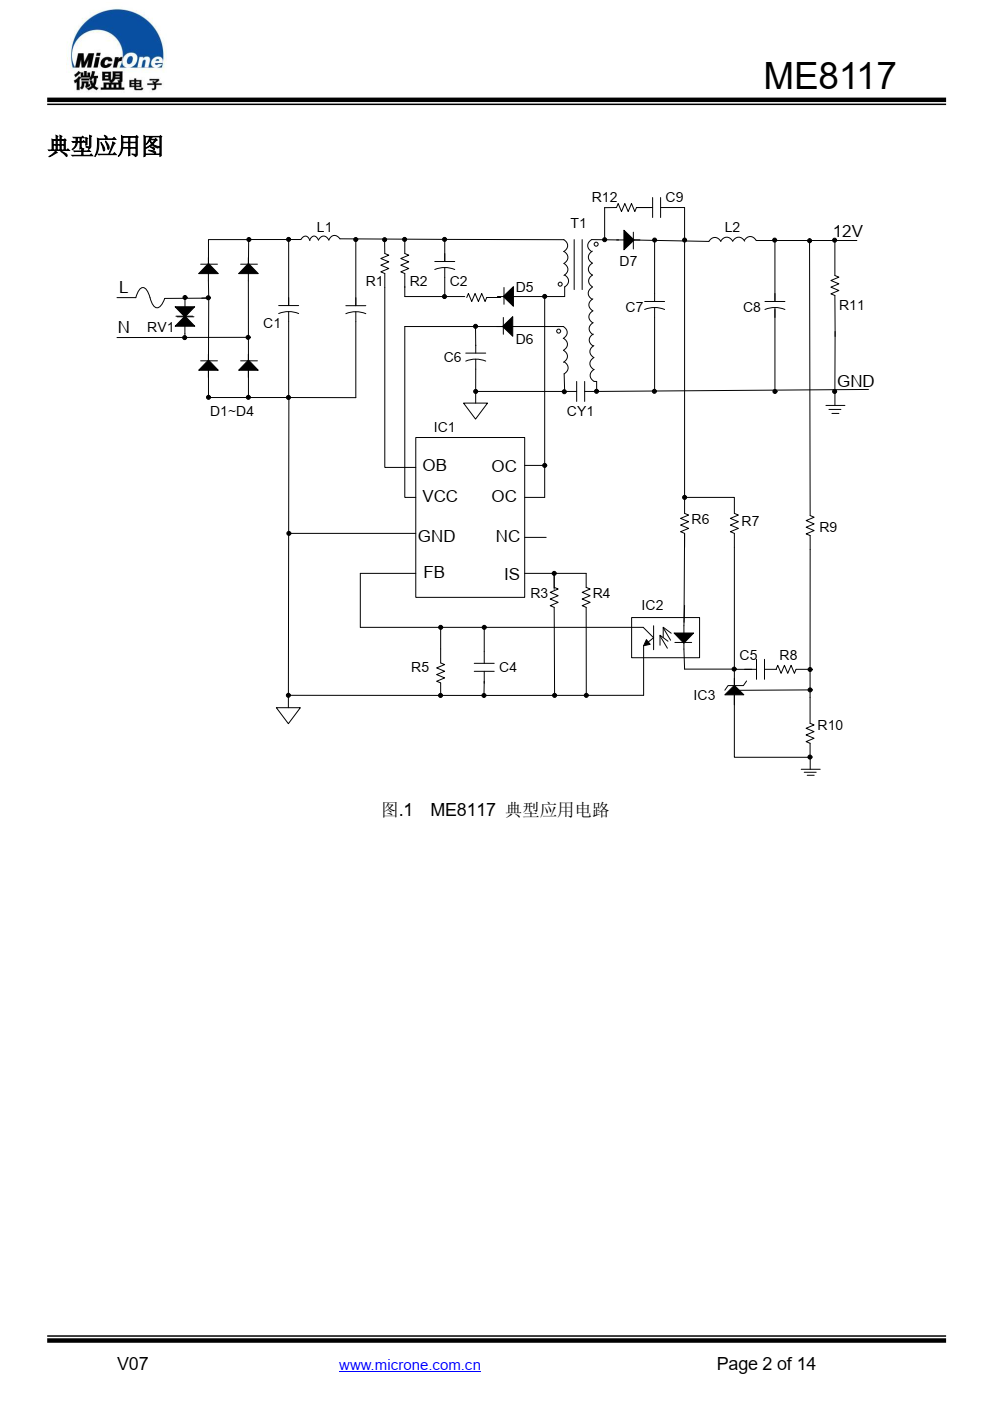 ME8117高性能电流模式PWM控制器，专为高性价比AC/DC 转换器设计